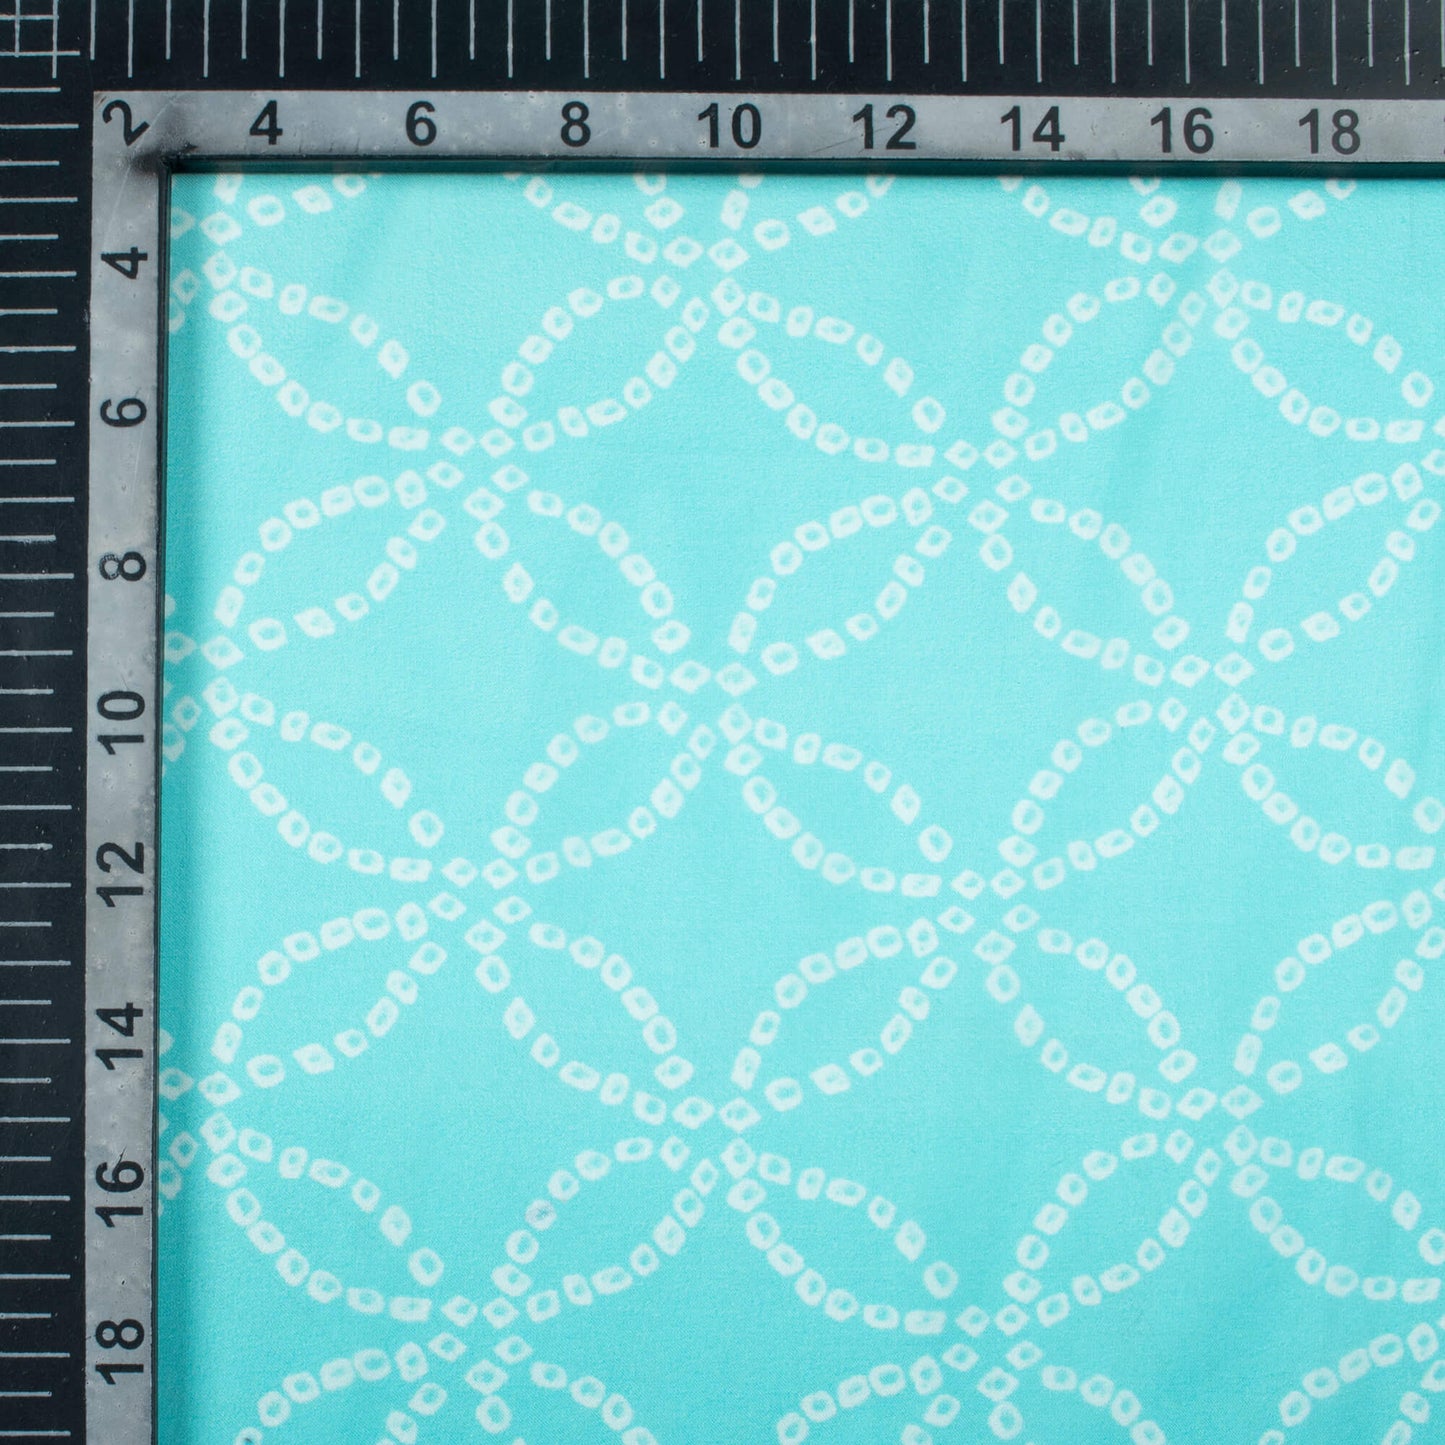 Sky Blue And Sea Green Ombre Pattern Digital Print Organza Satin Fabric